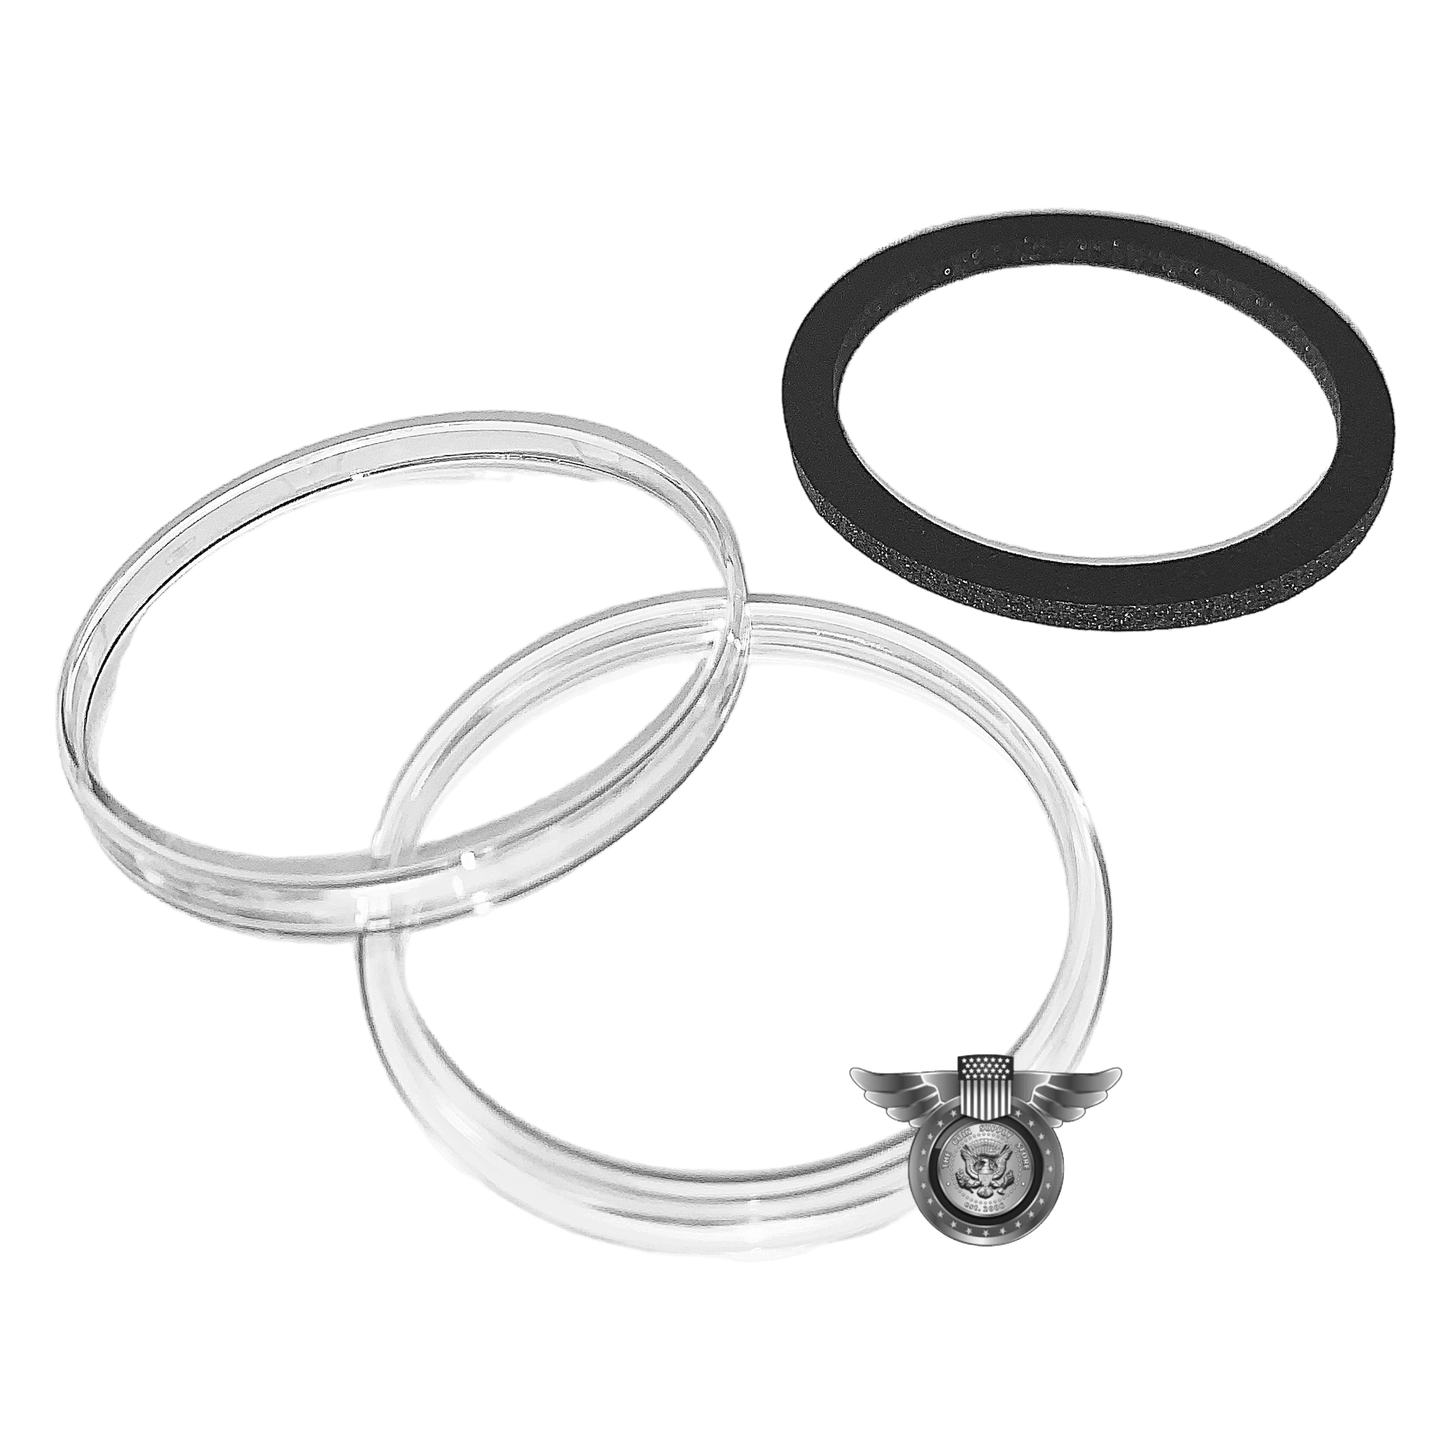 Ring Type Air-Tite Model I-Loop - 33mm Black (Ornament Holder)